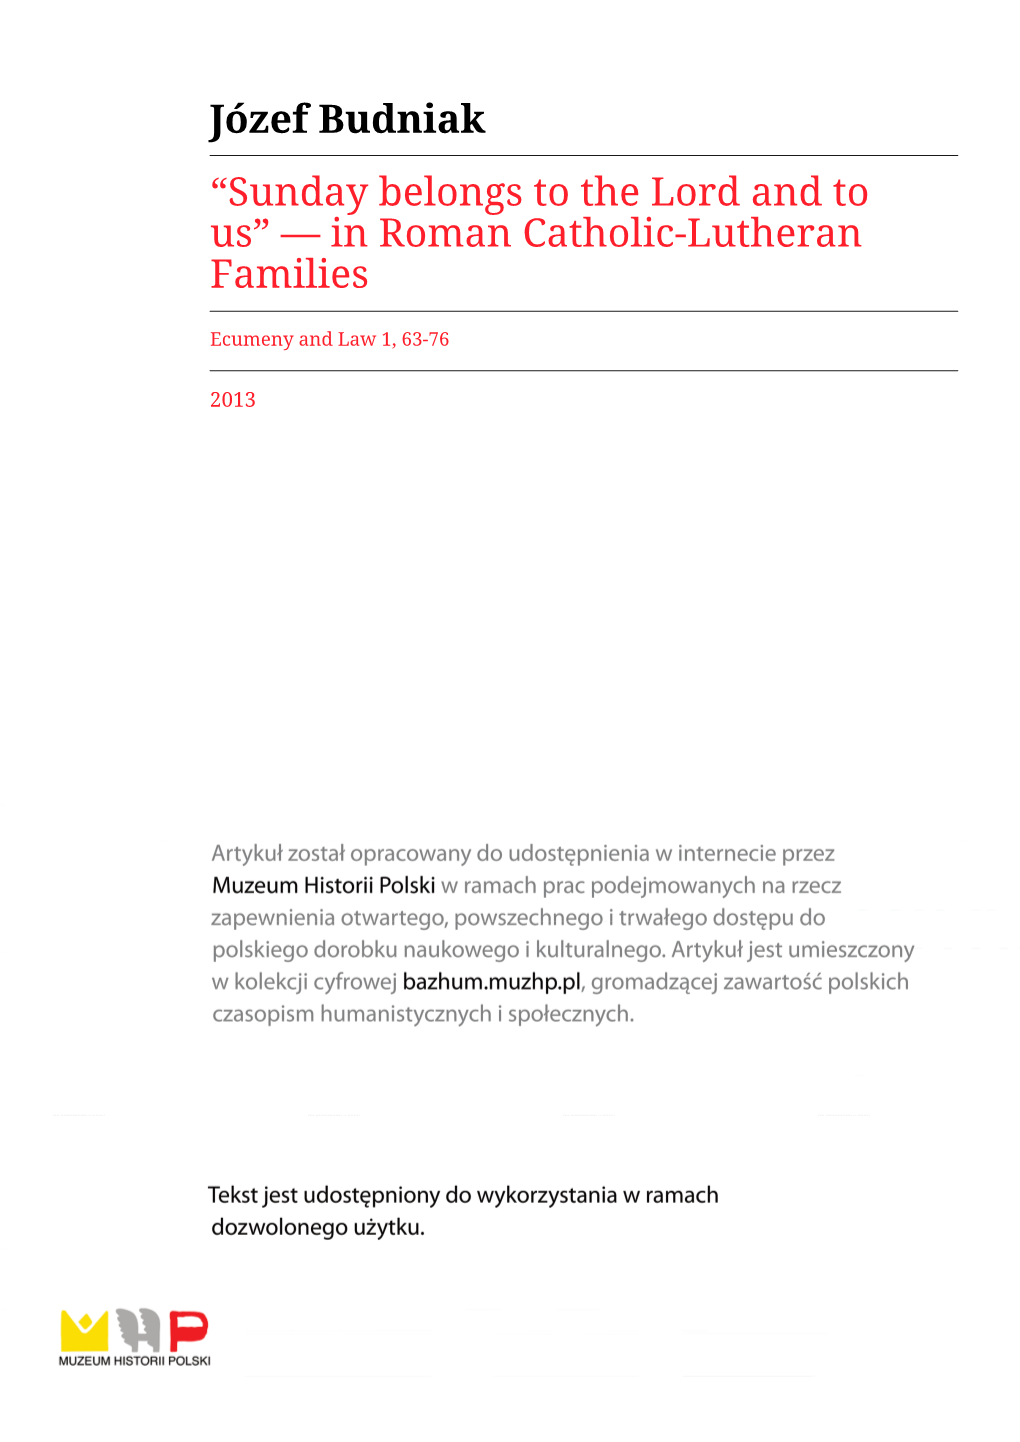 In Roman Catholic-Lutheran Families